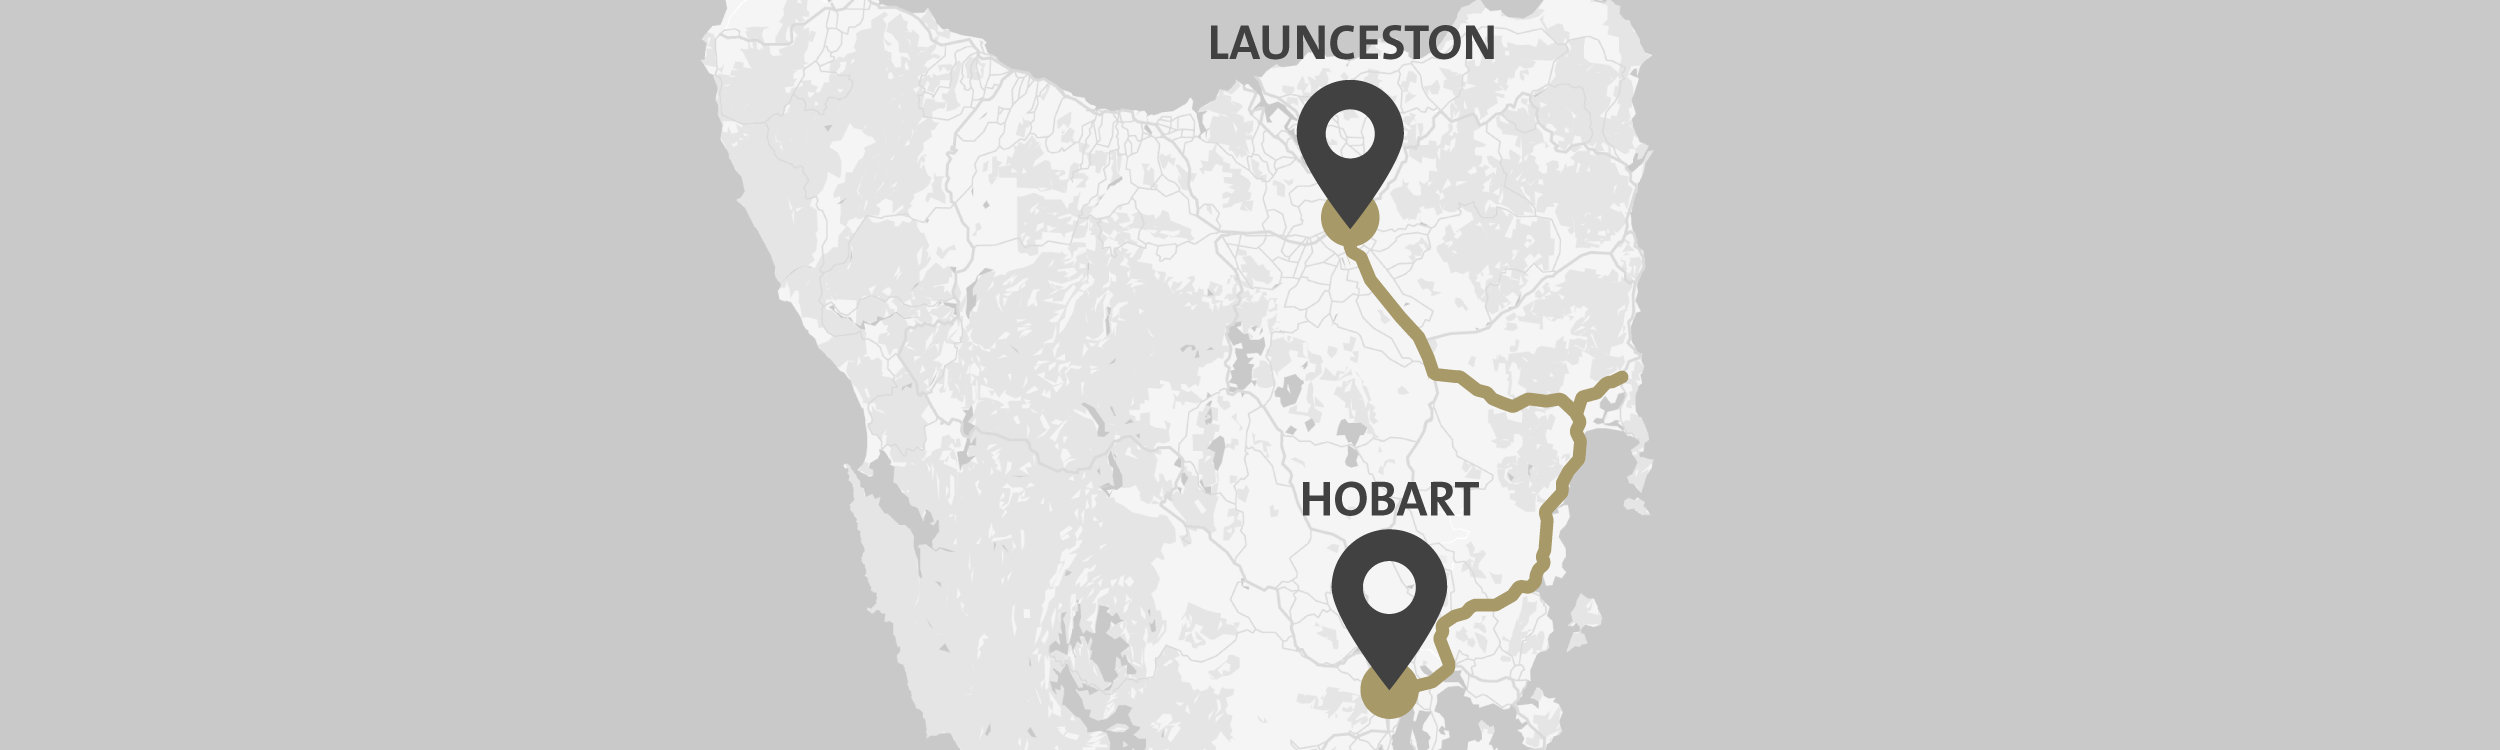 Hobart to Launceston Road Trip Map